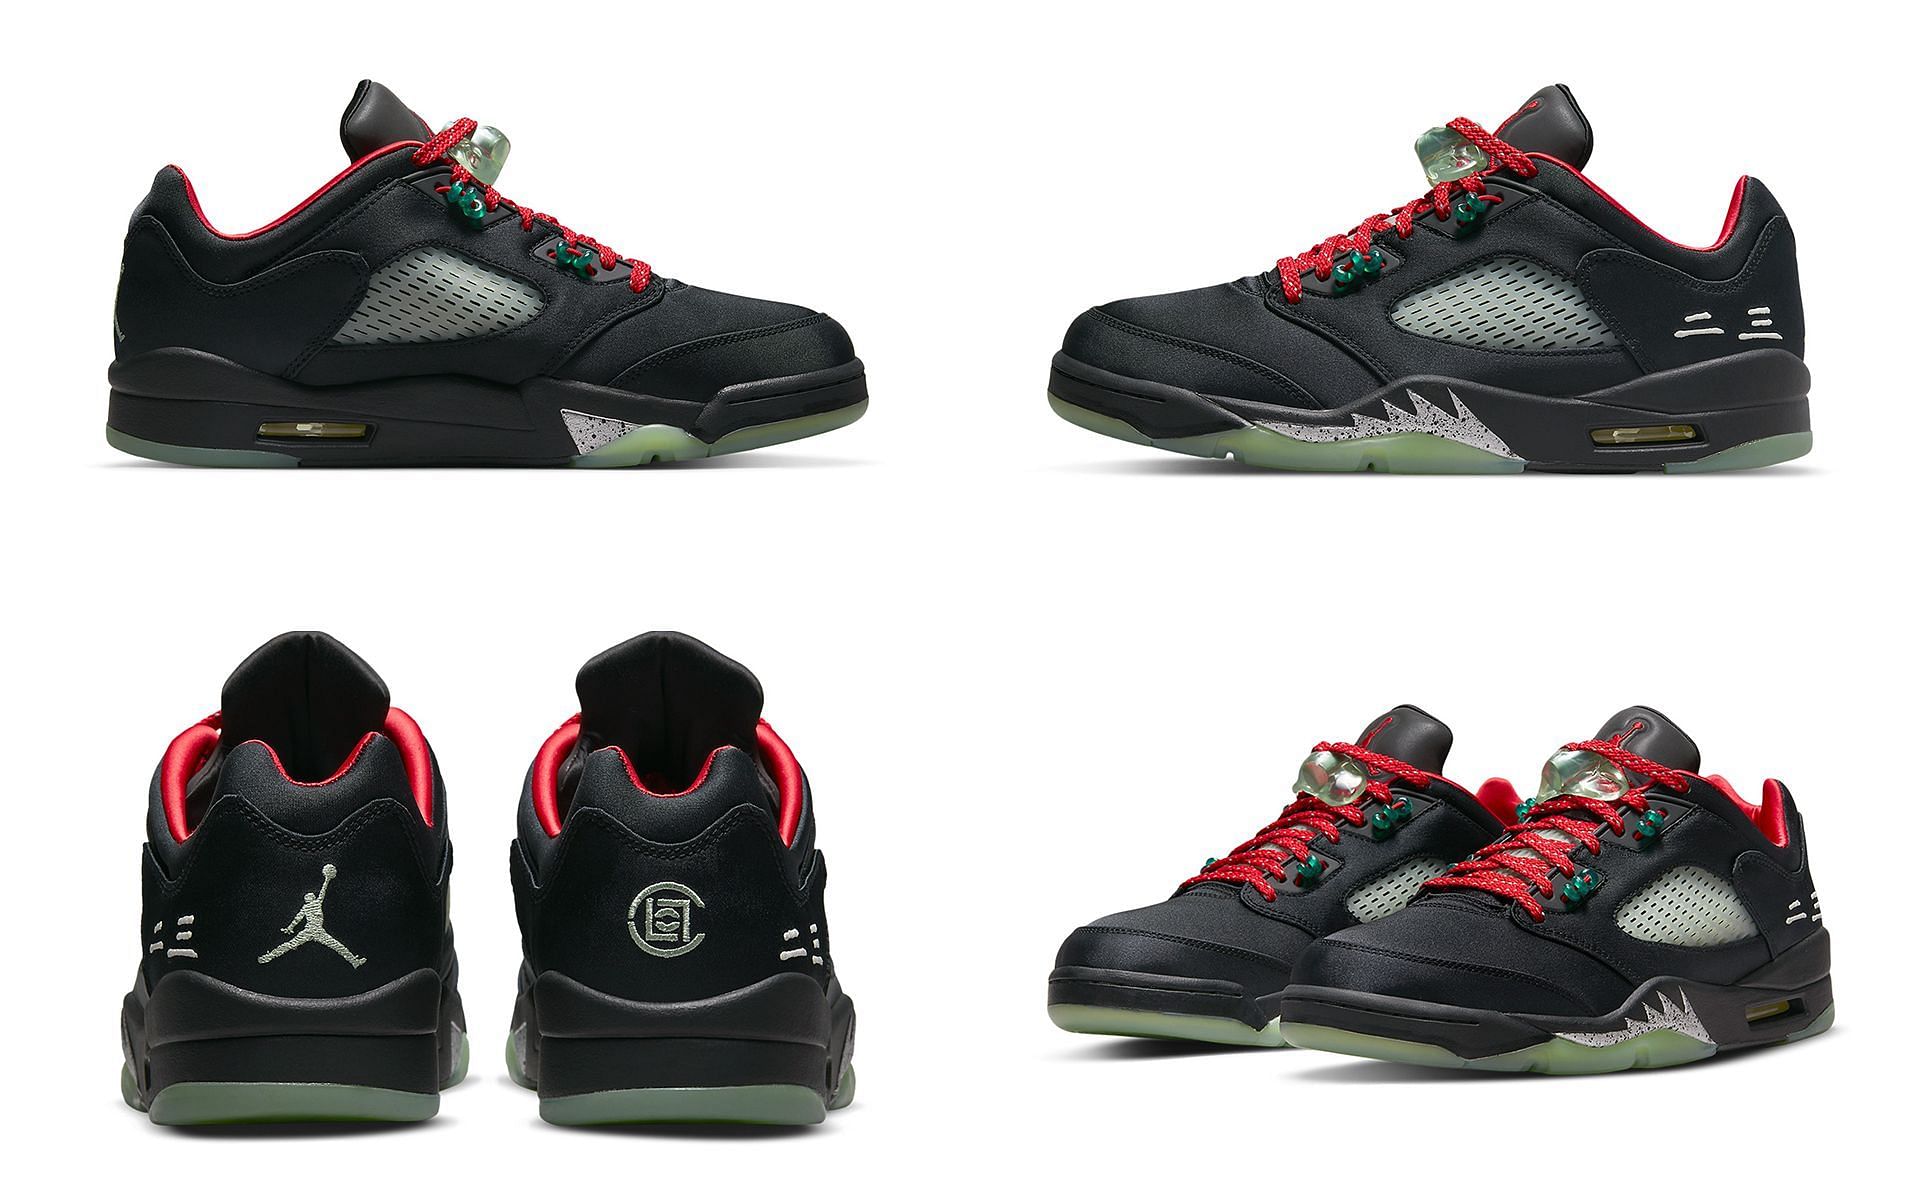 CLOT x Air Jordan 5 Low silhouettes (Image via Sportskeeda)